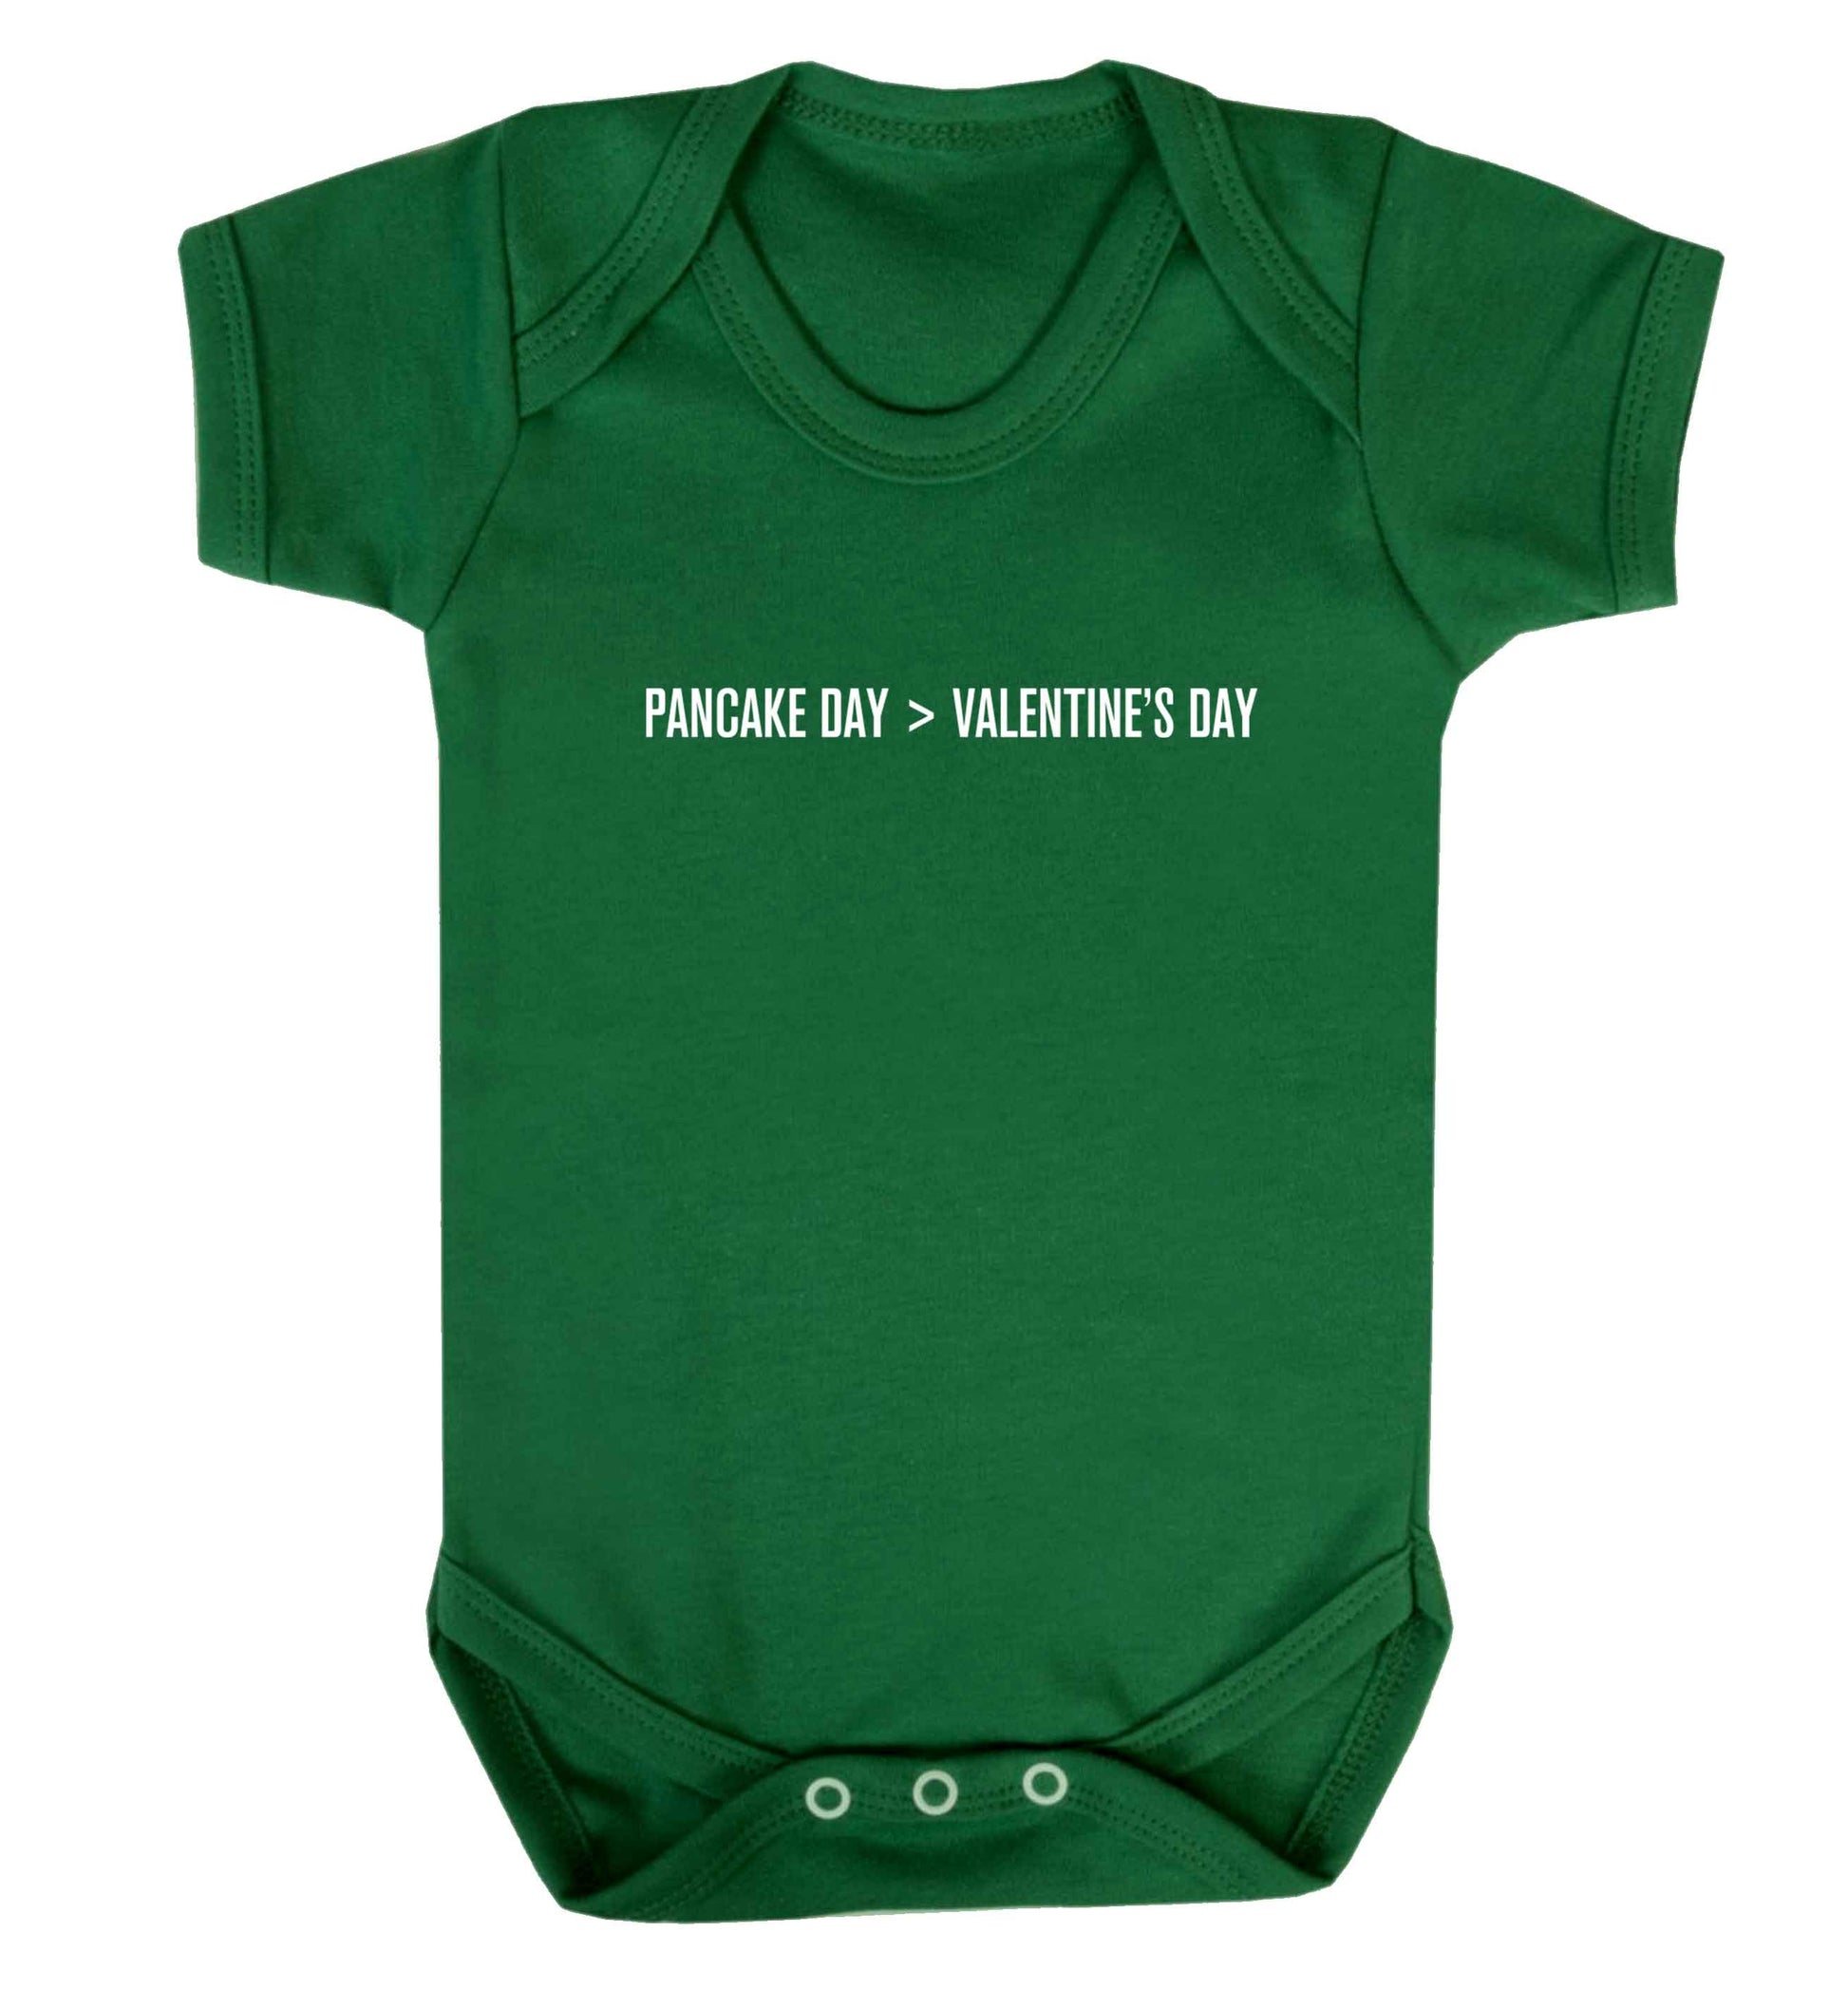 Pancake day > valentines day baby vest green 18-24 months